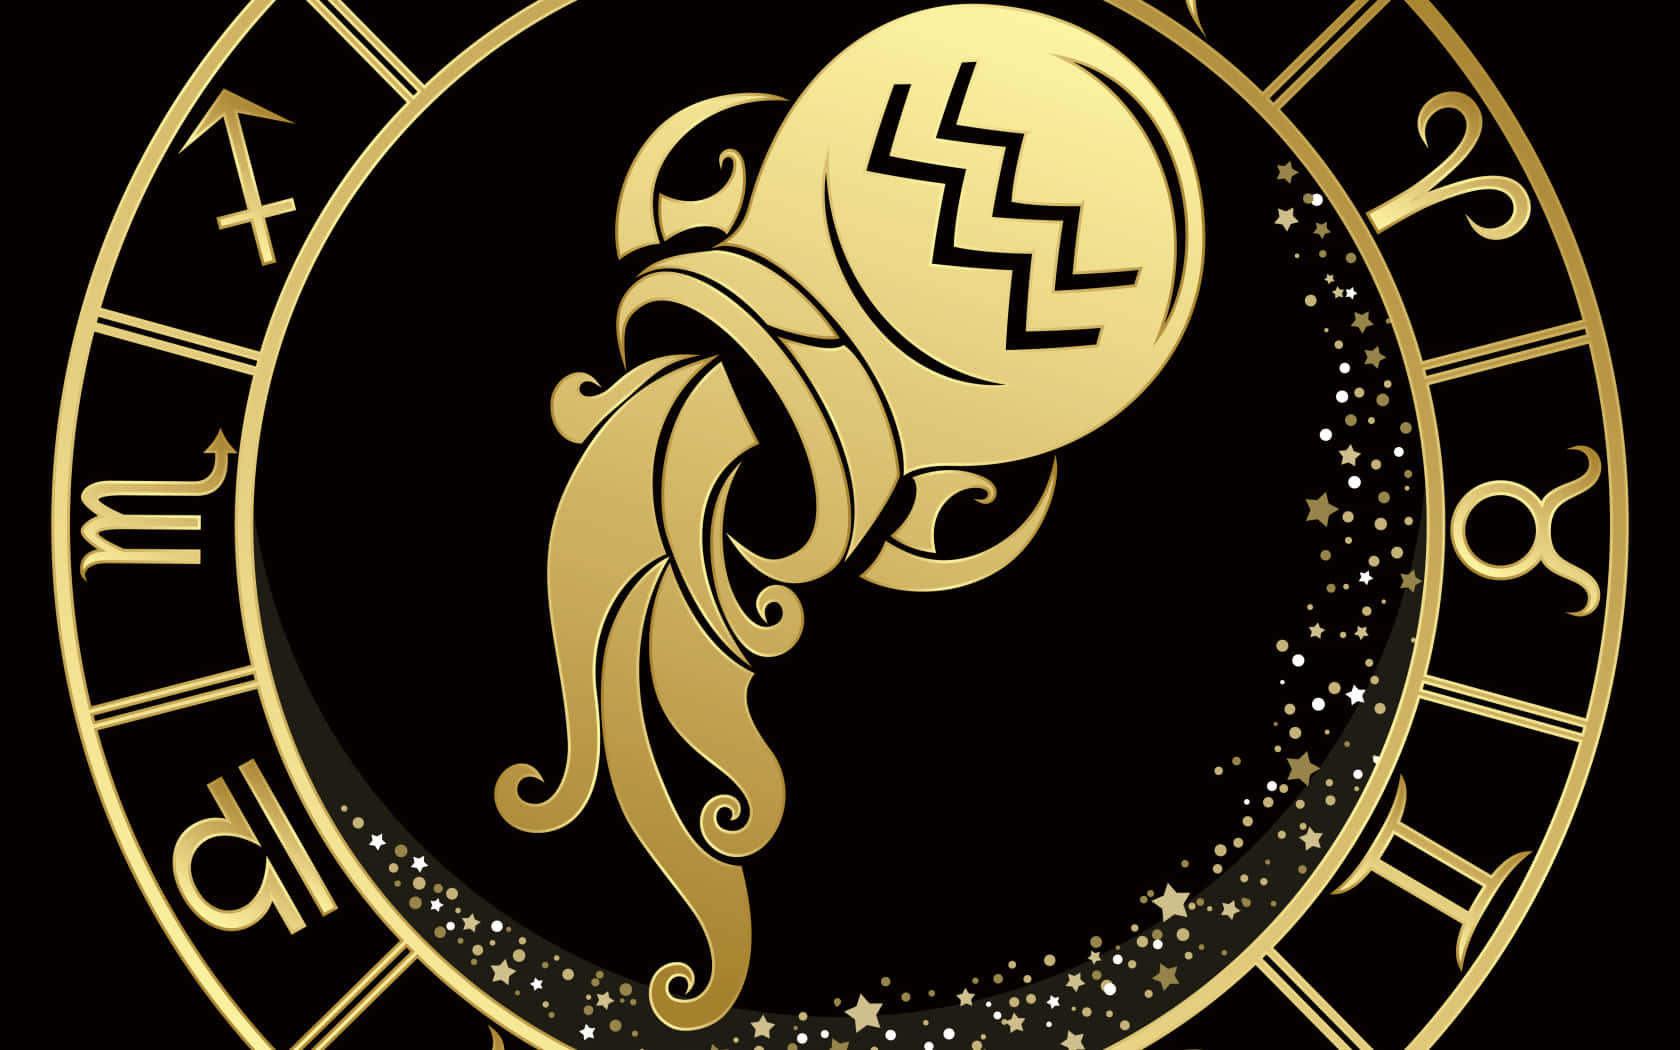 Ettguldtjurtecken Med En Gyllene Bläckfisk (translation: A Gold Zodiac Sign With A Golden Octopus) Wallpaper